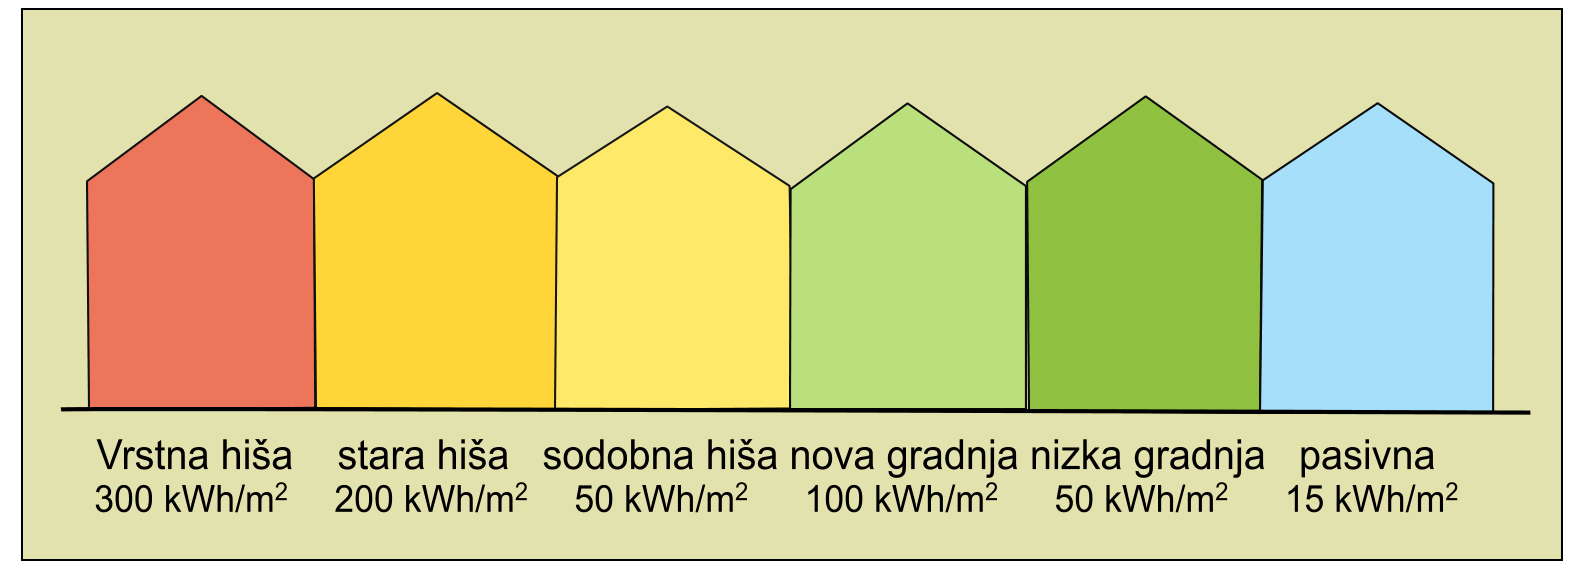 Toplotna energija na površino tal  kWh  (m2a)